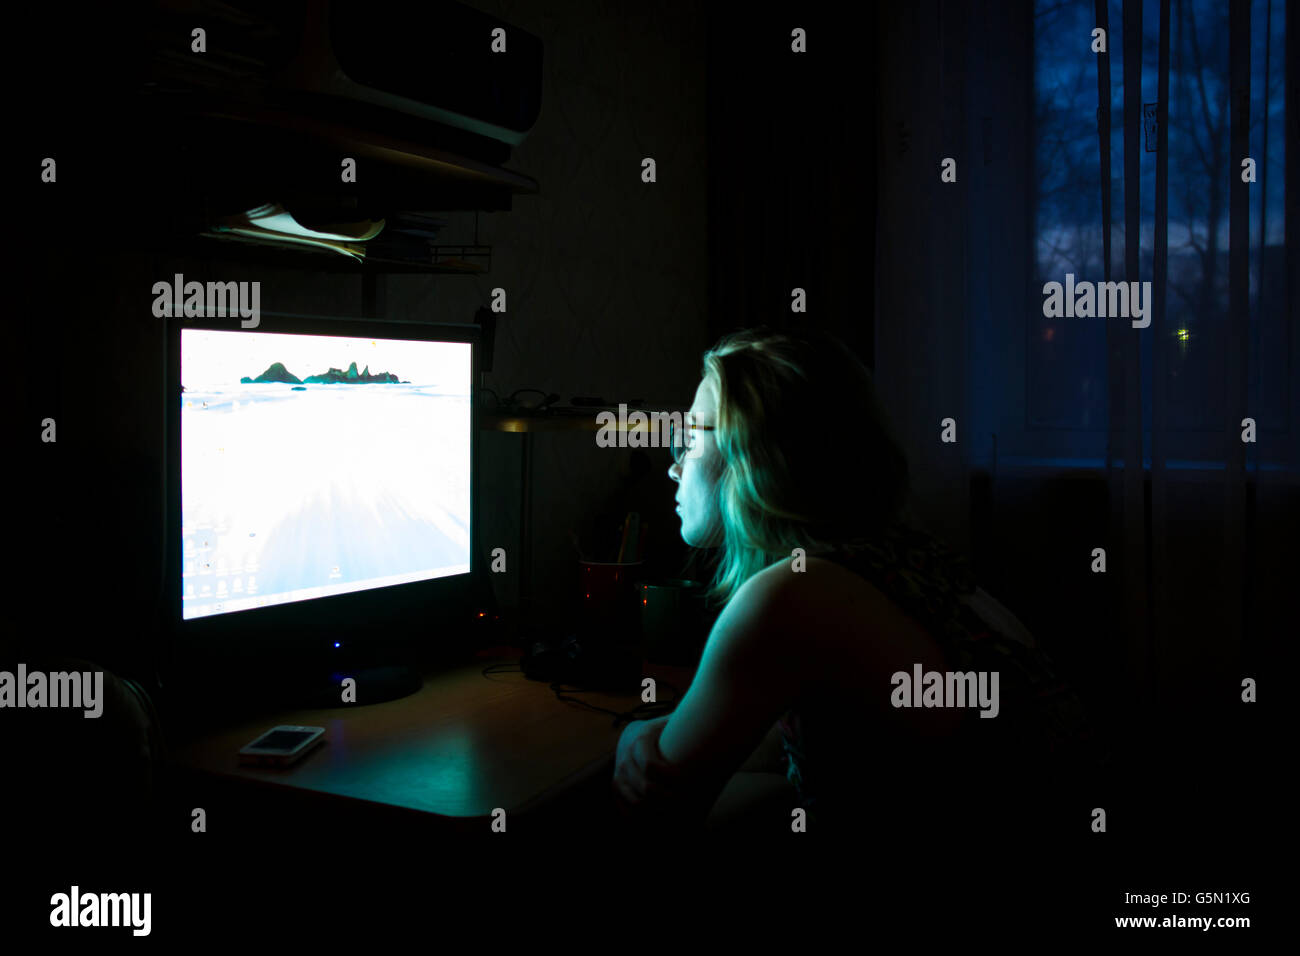 Caucasian woman using computer at night Stock Photo